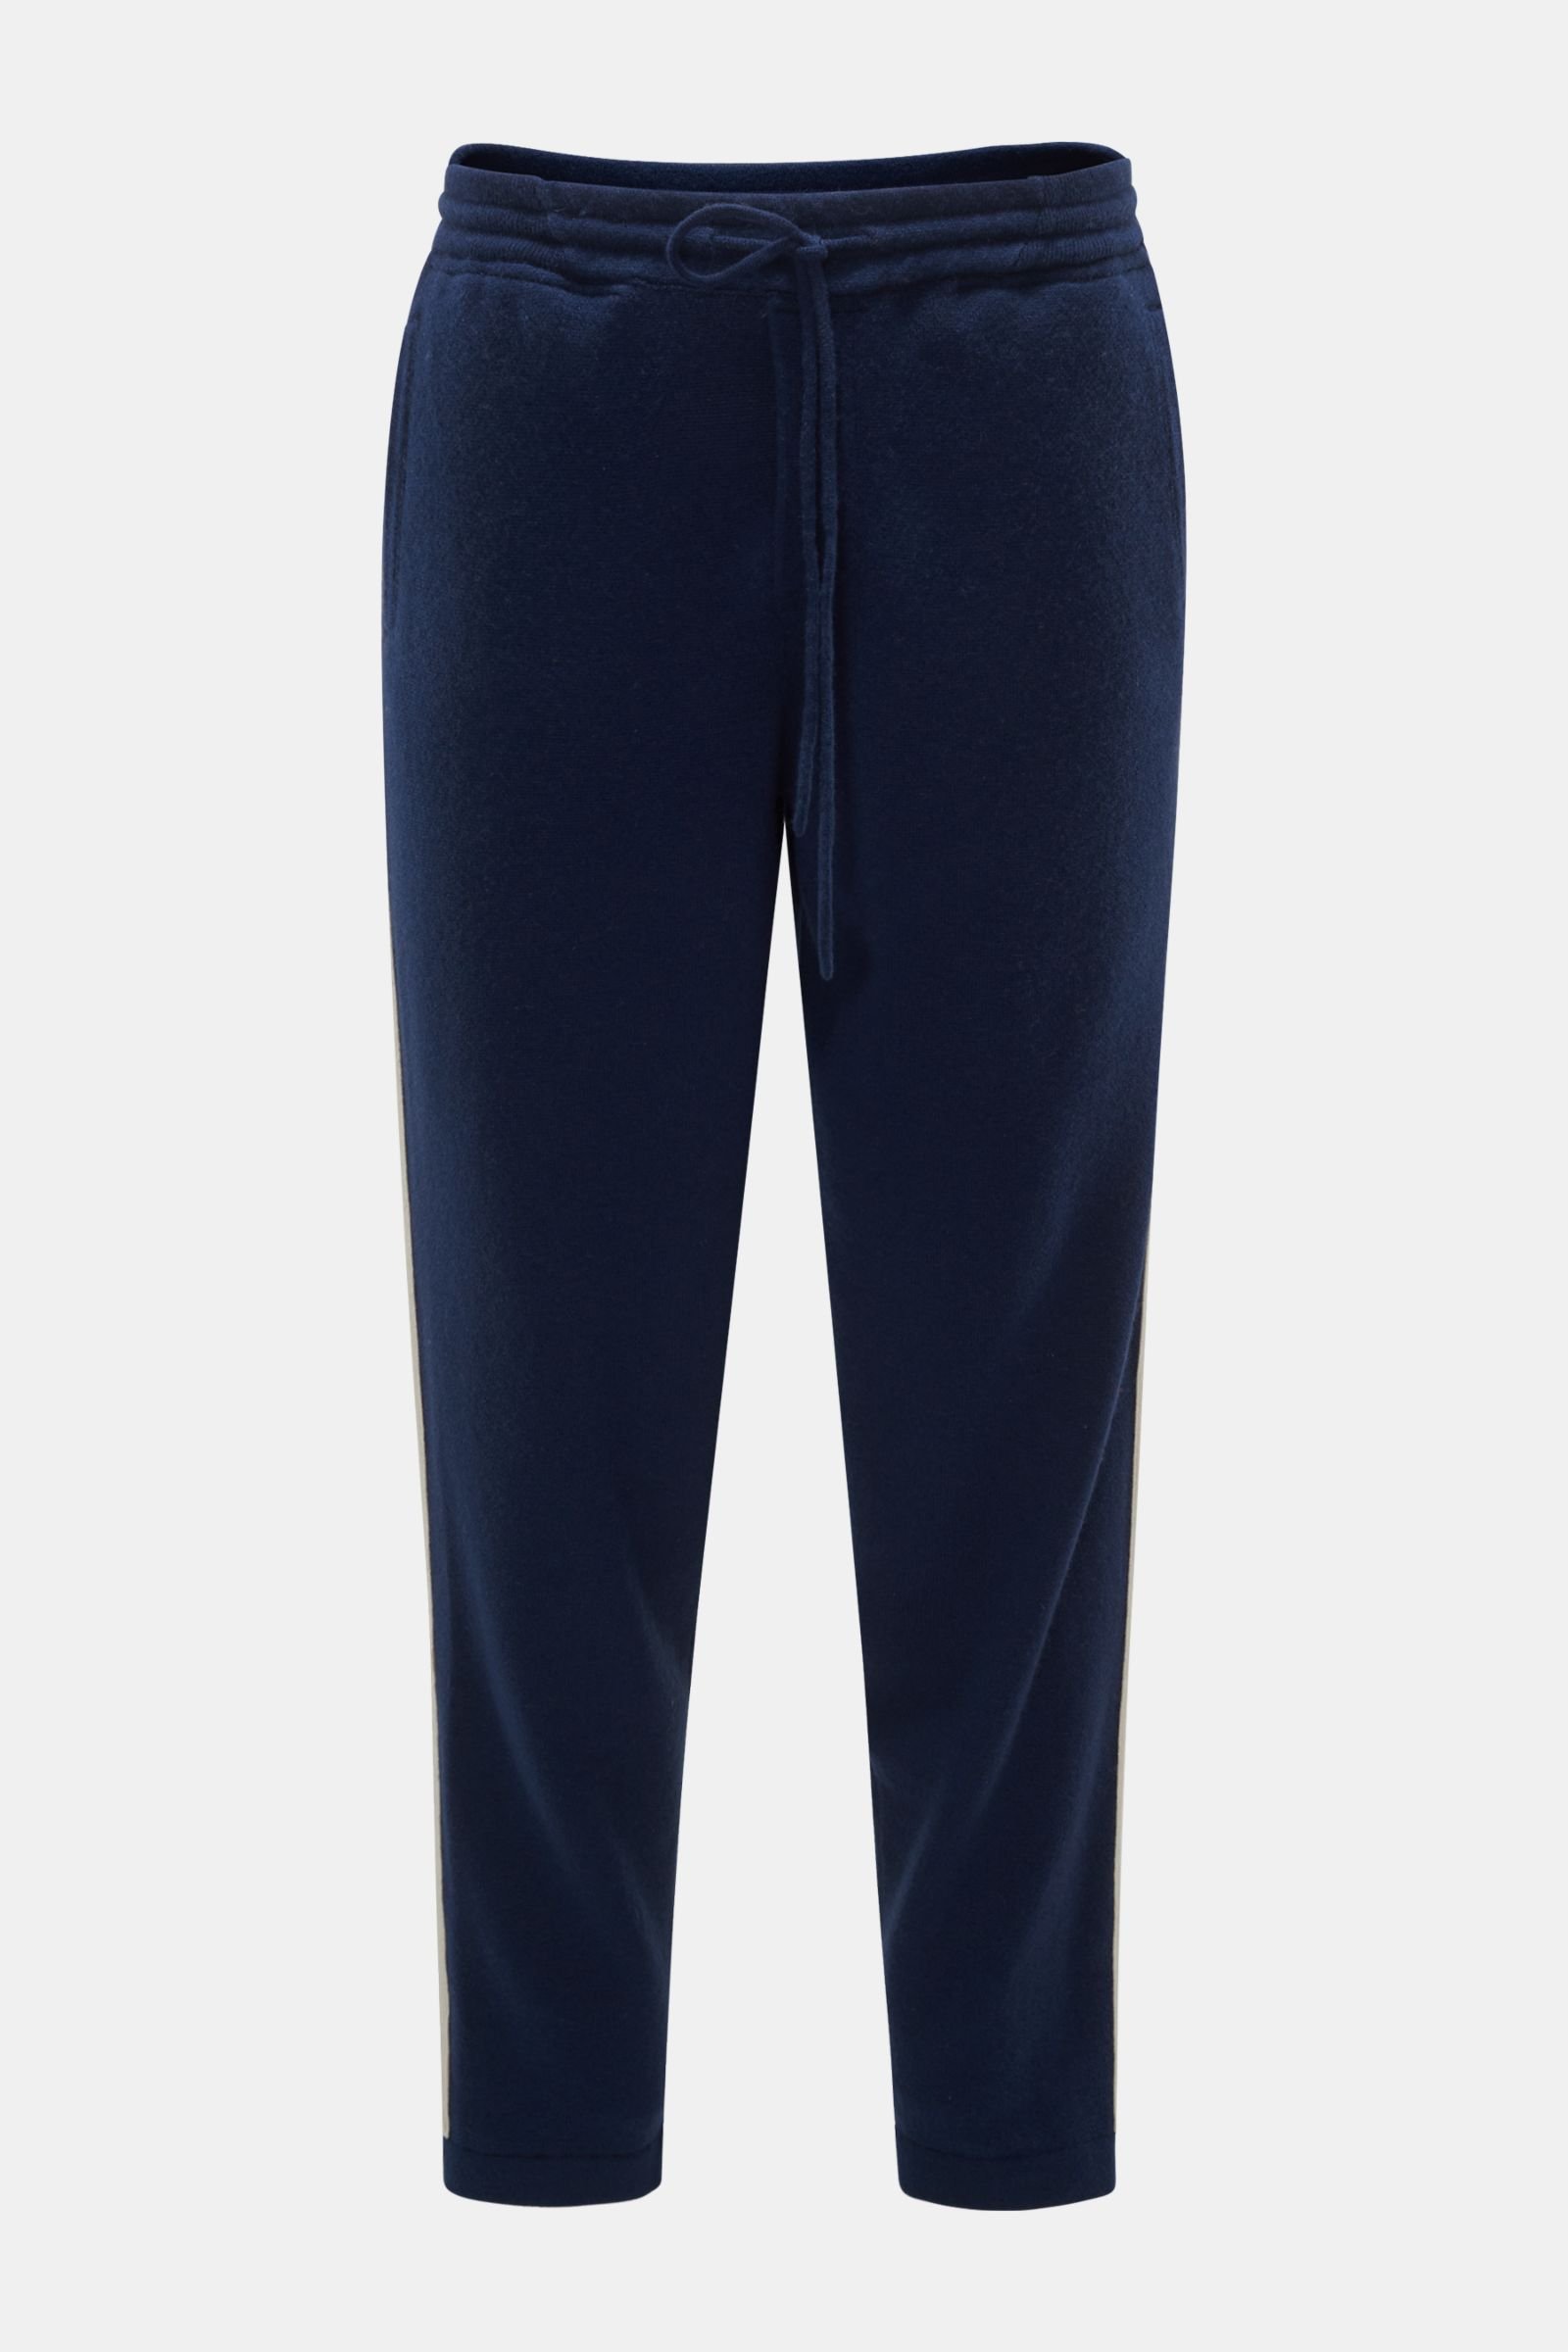 Cashmere jogger pants dark blue